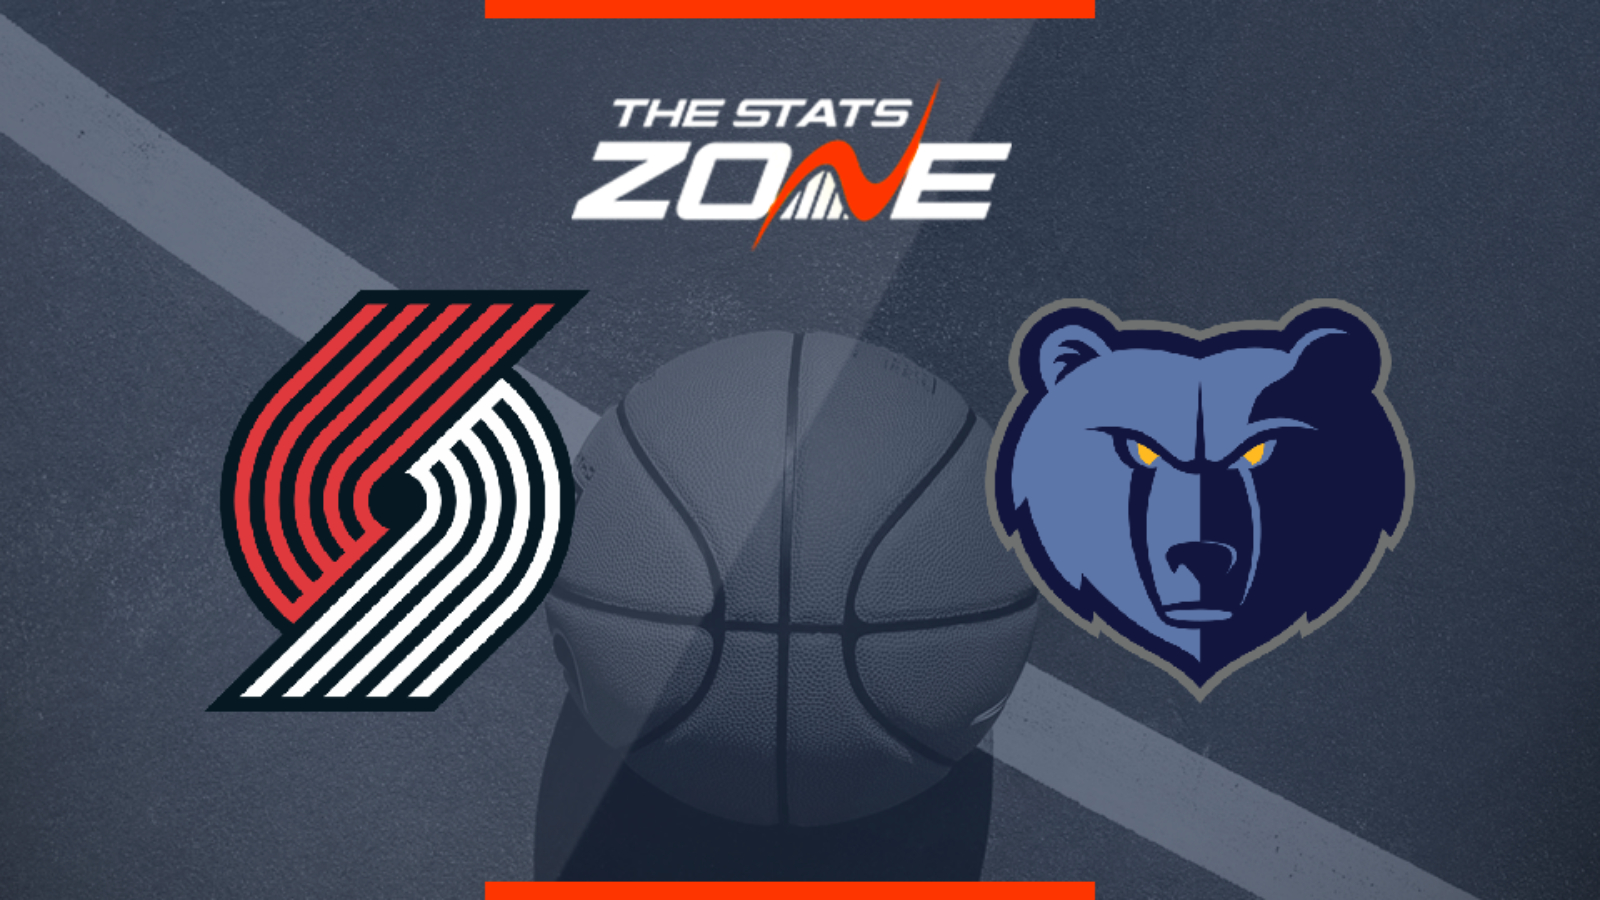 2019 20 Nba Portland Trail Blazers Memphis Grizzlies Preview Pick The Stats Zone